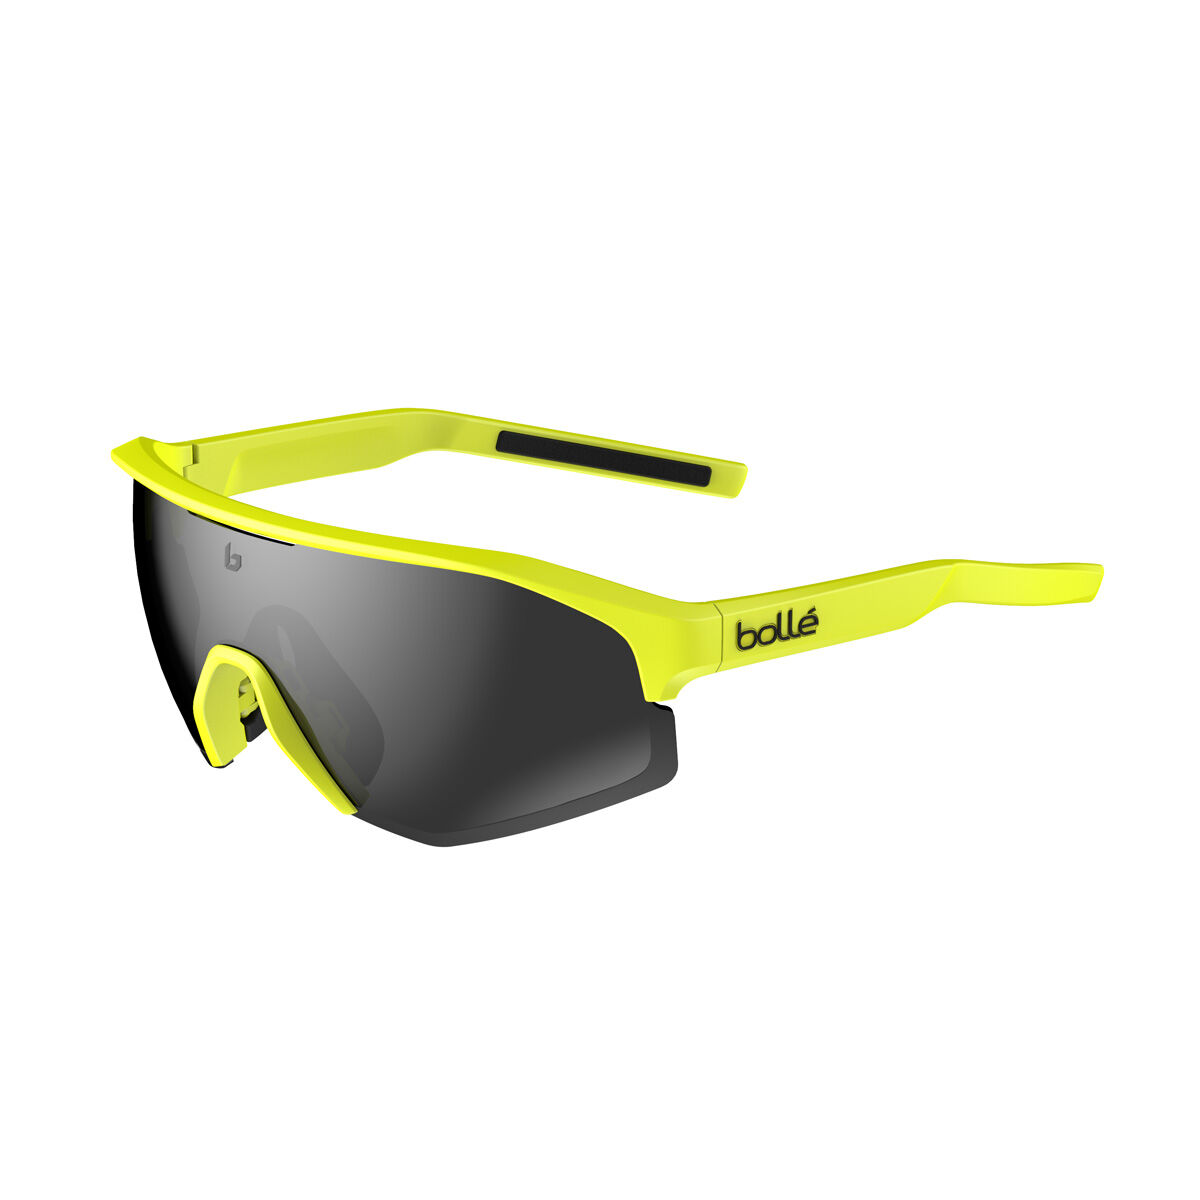 Bollé LIGHTSHIFTER XL Cycling Sunglasses - Photochromic Lenses 